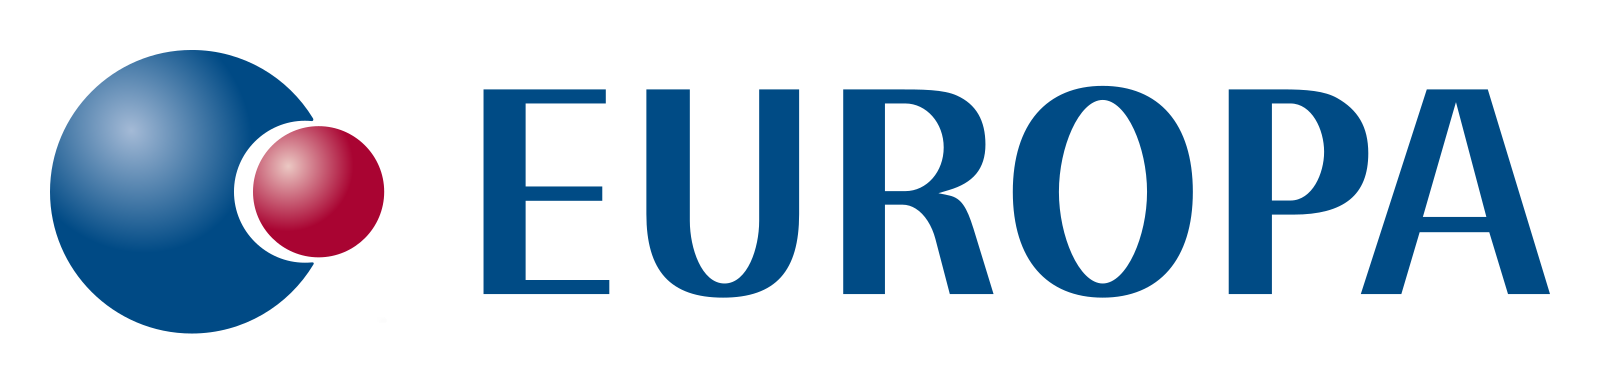 Europa сайт. Европа лого. Русская Европа логотип. Логотип Europa Corporation. Europa картинка для сайта.